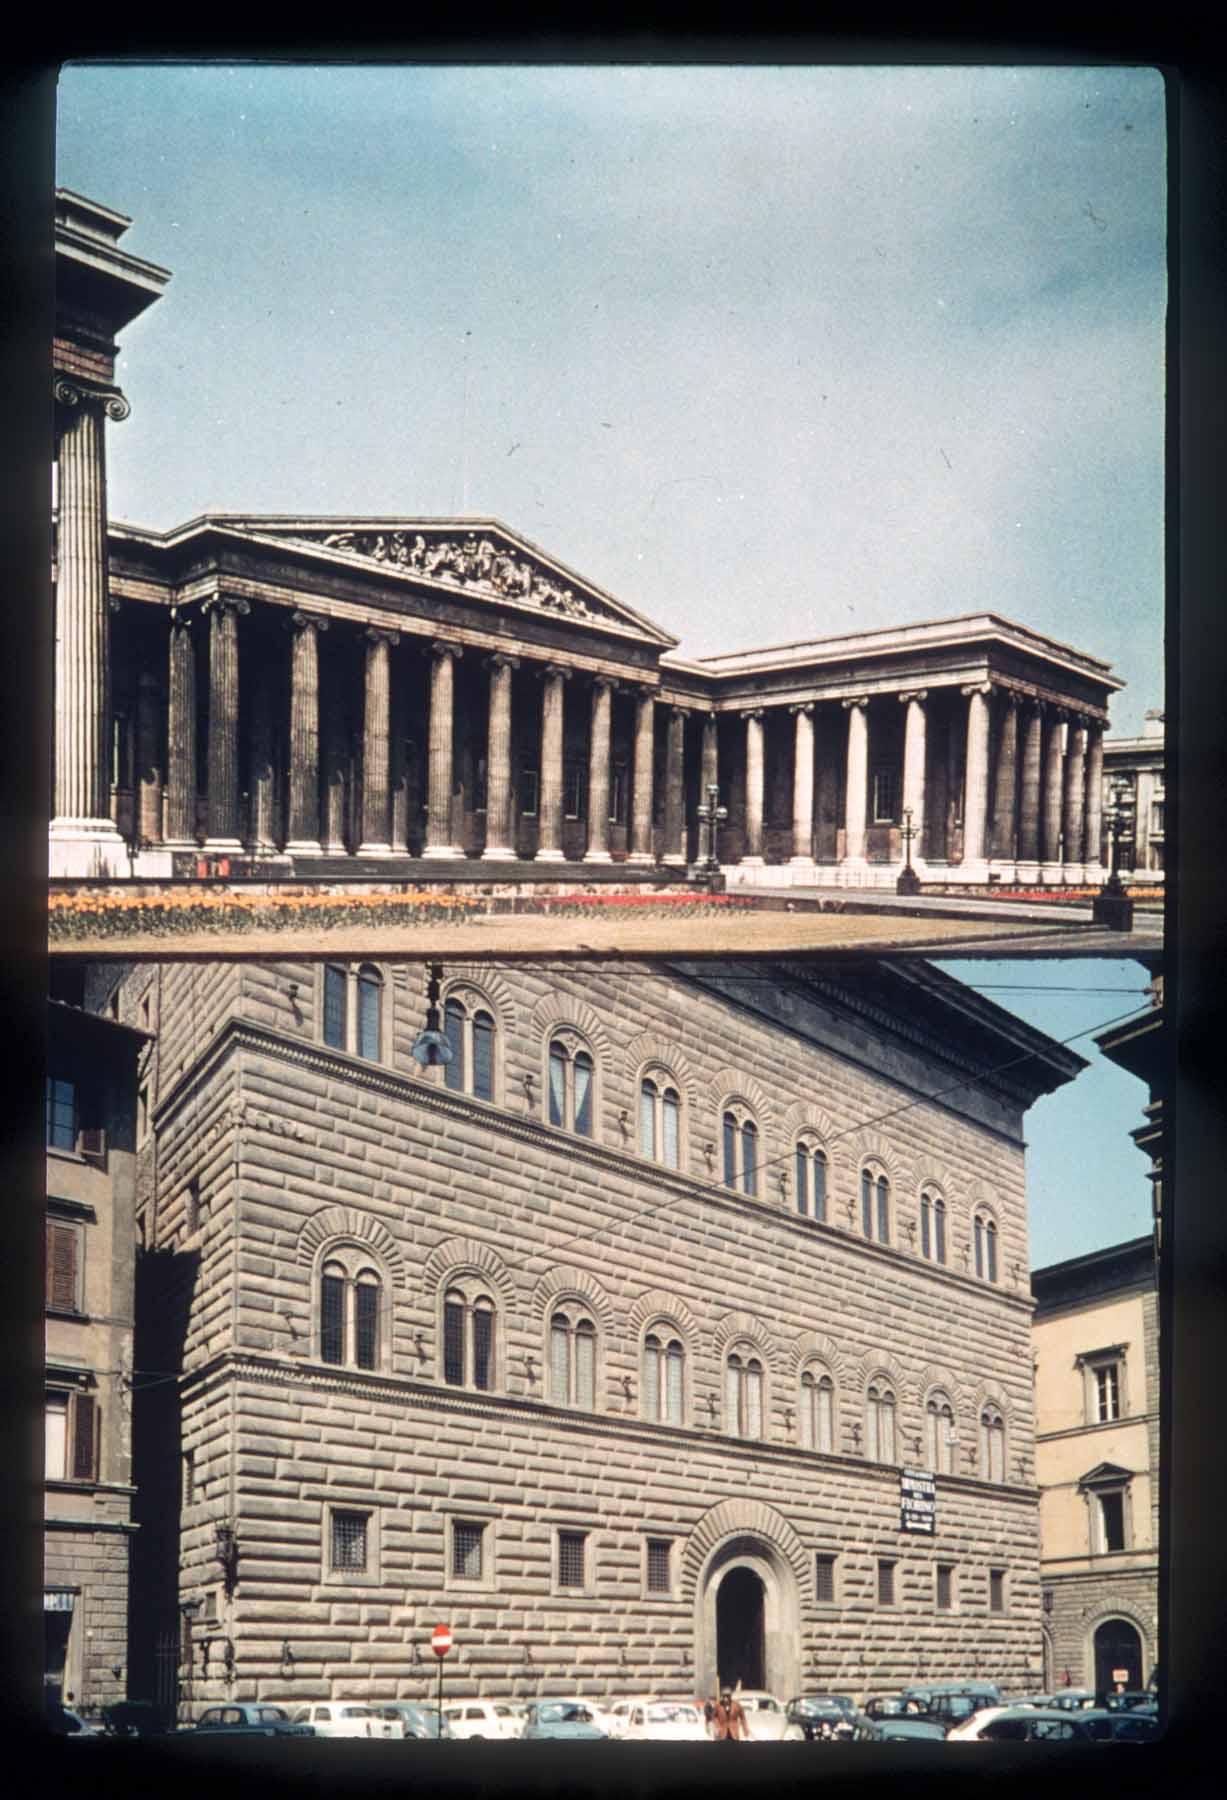 British Museum, London (Top). Strozzi Palace, Florence (Bottom)